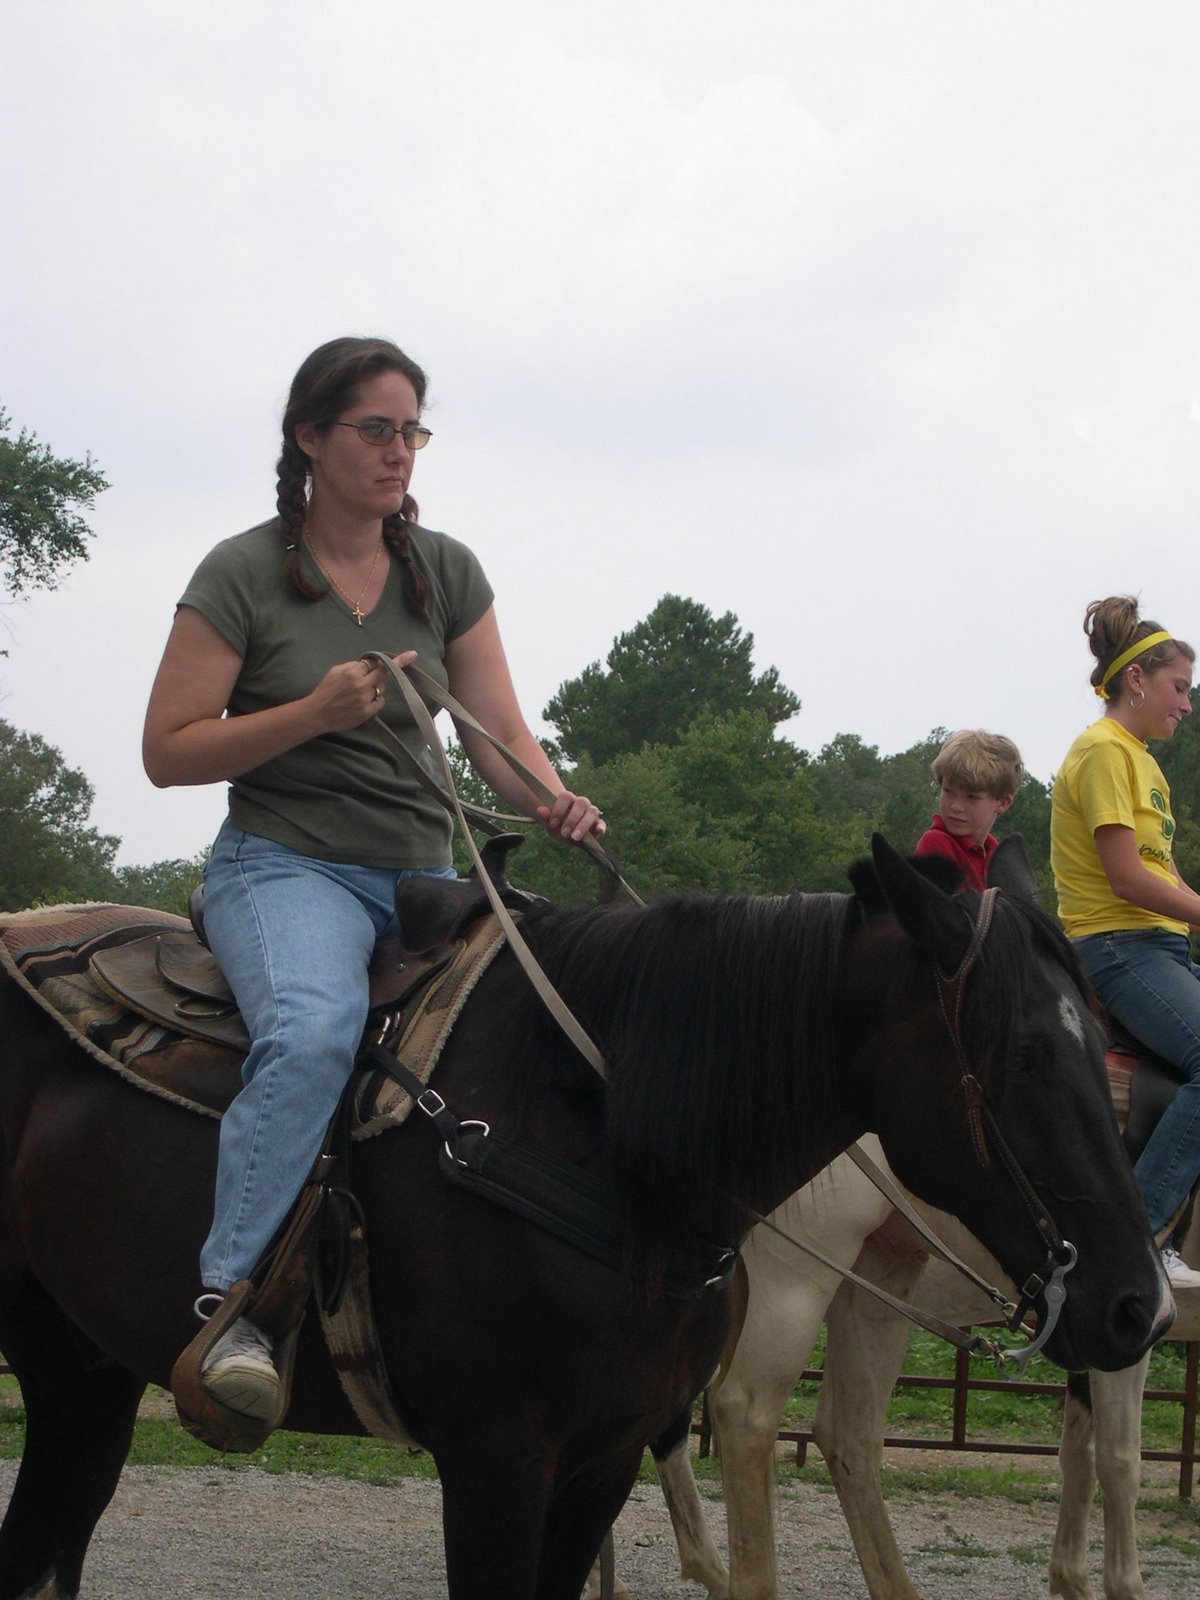 [Christine+on+horseback+2.jpg]